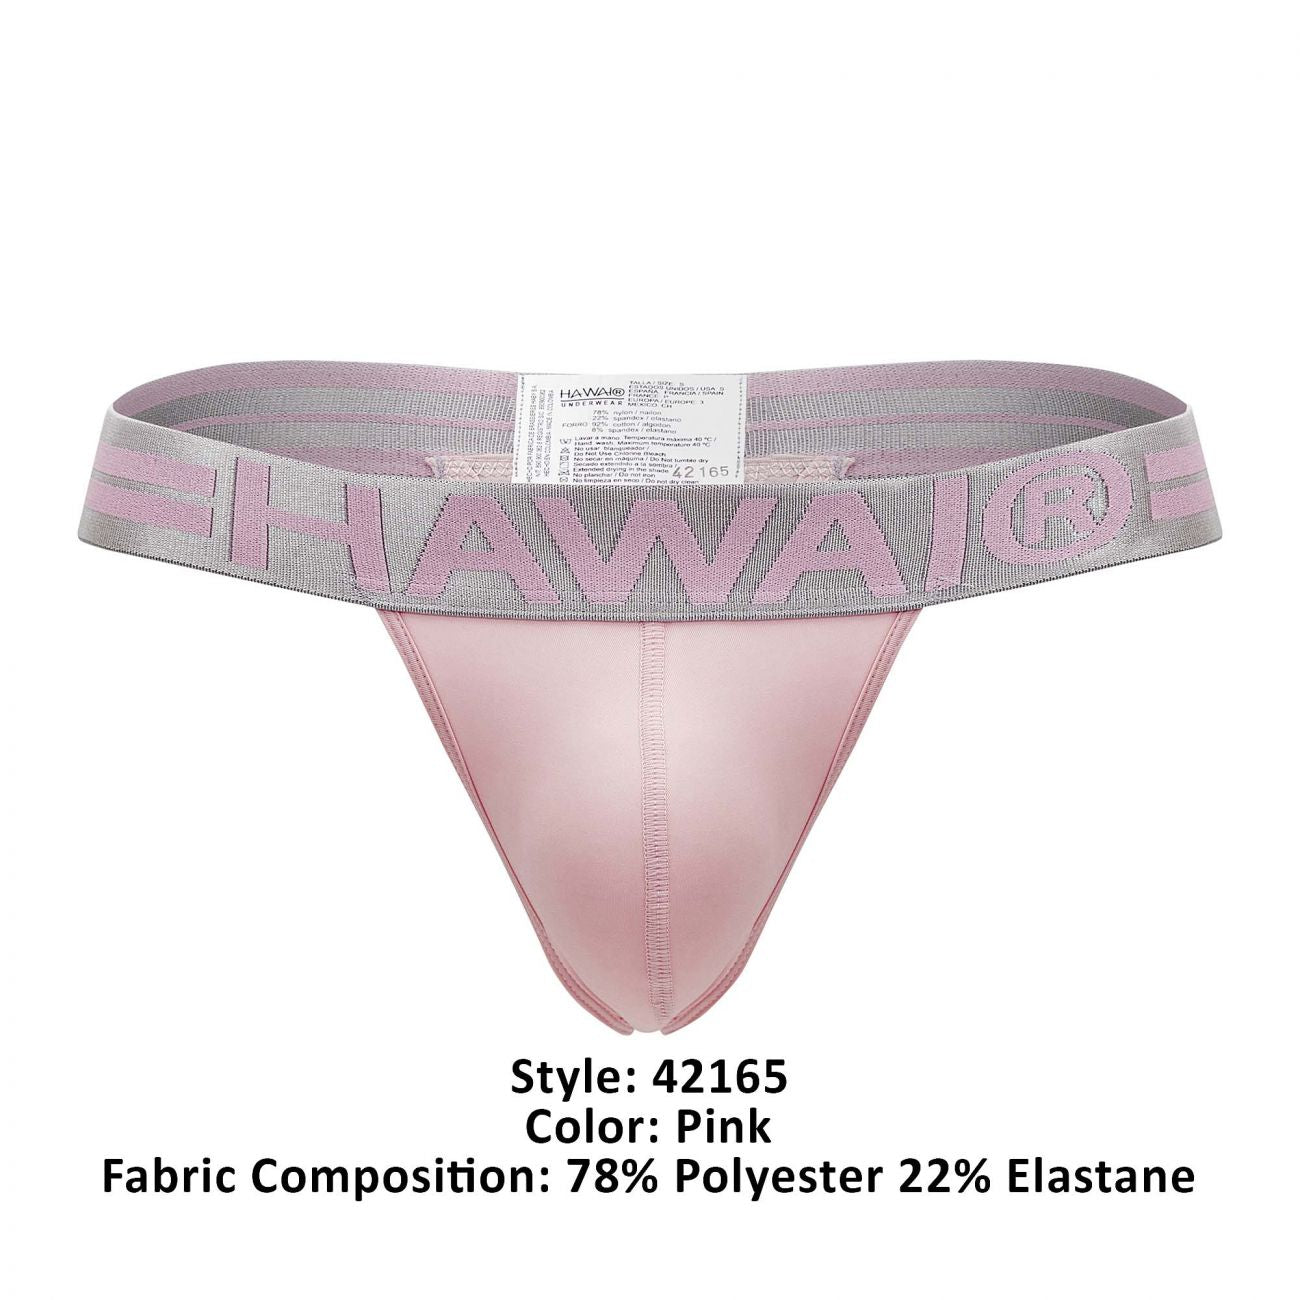 HAWAI 42165 Printed Thongs Pink